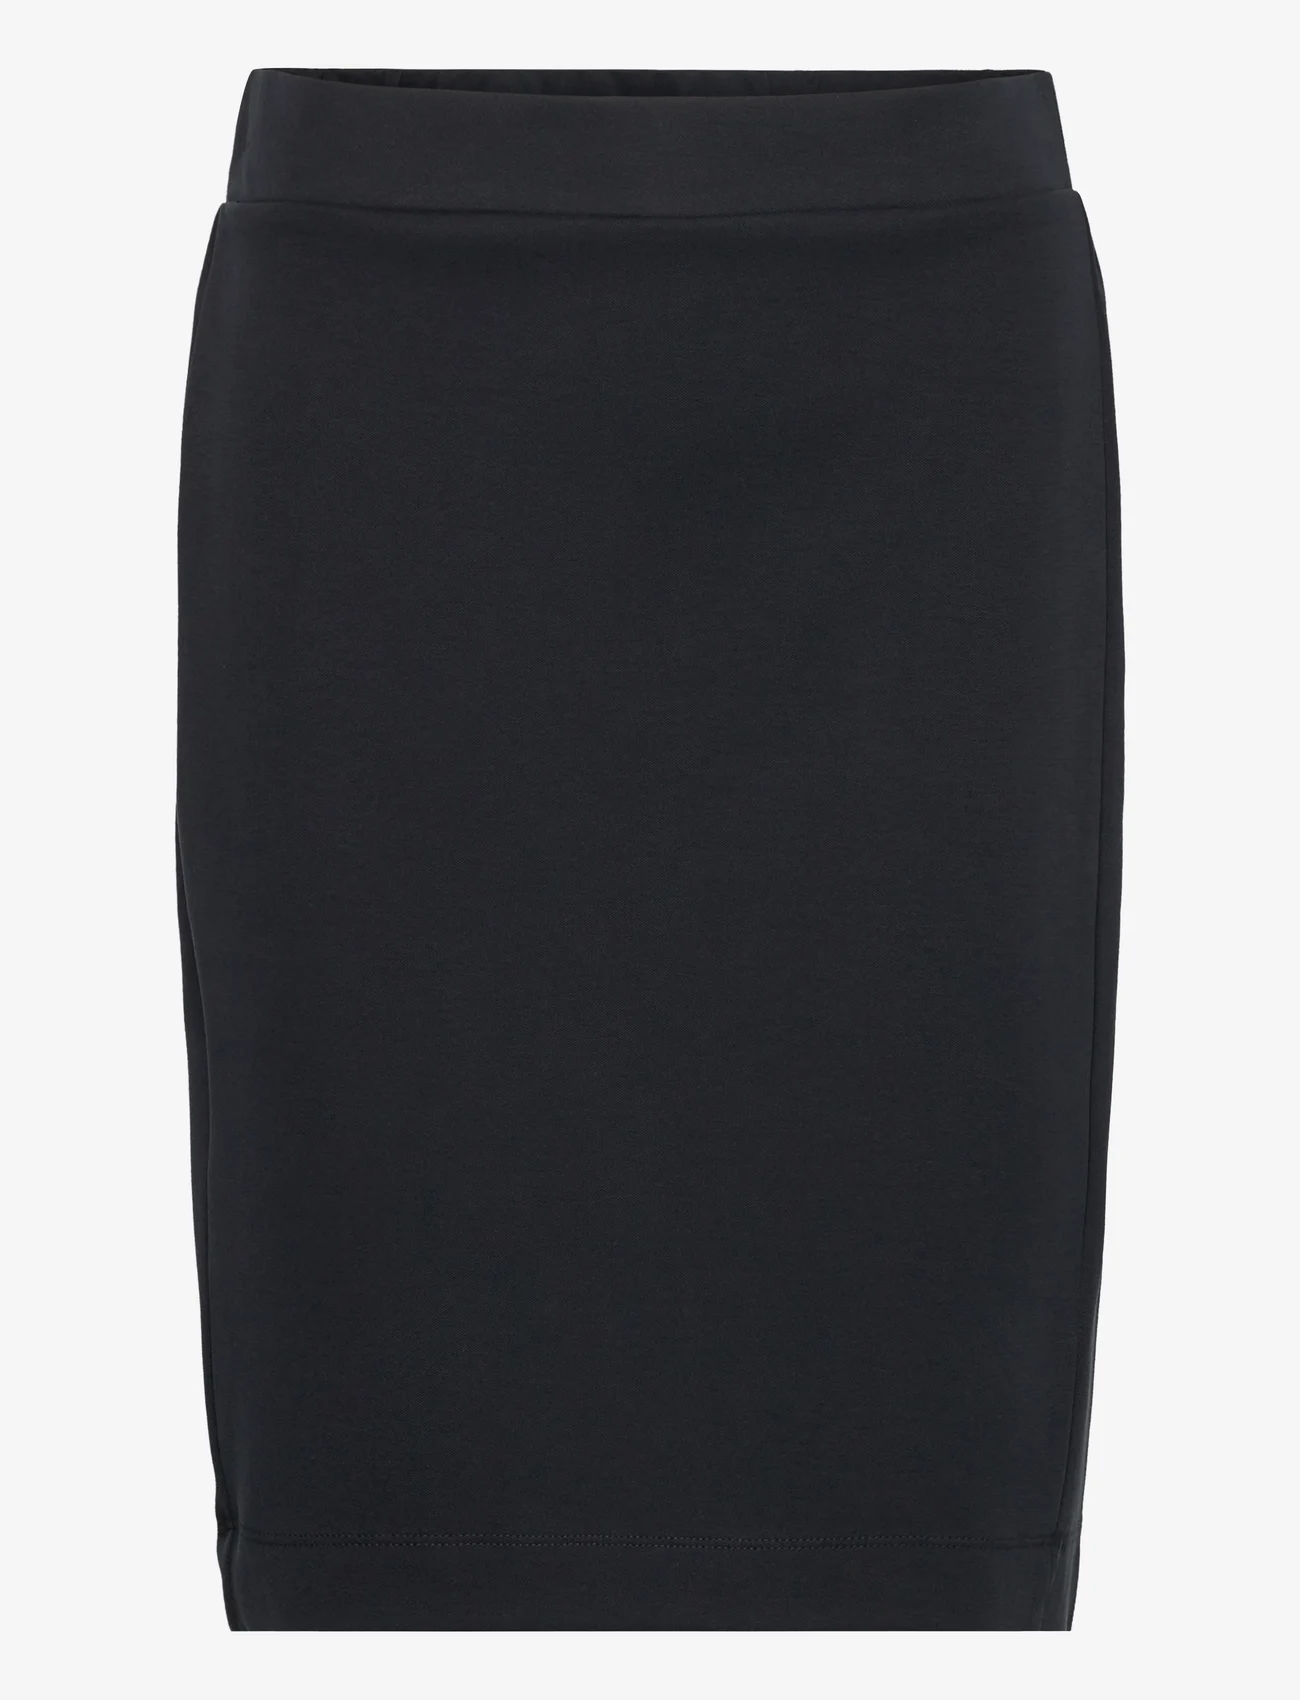 InWear - AronoIW Short Skirt - kurze röcke - black - 0